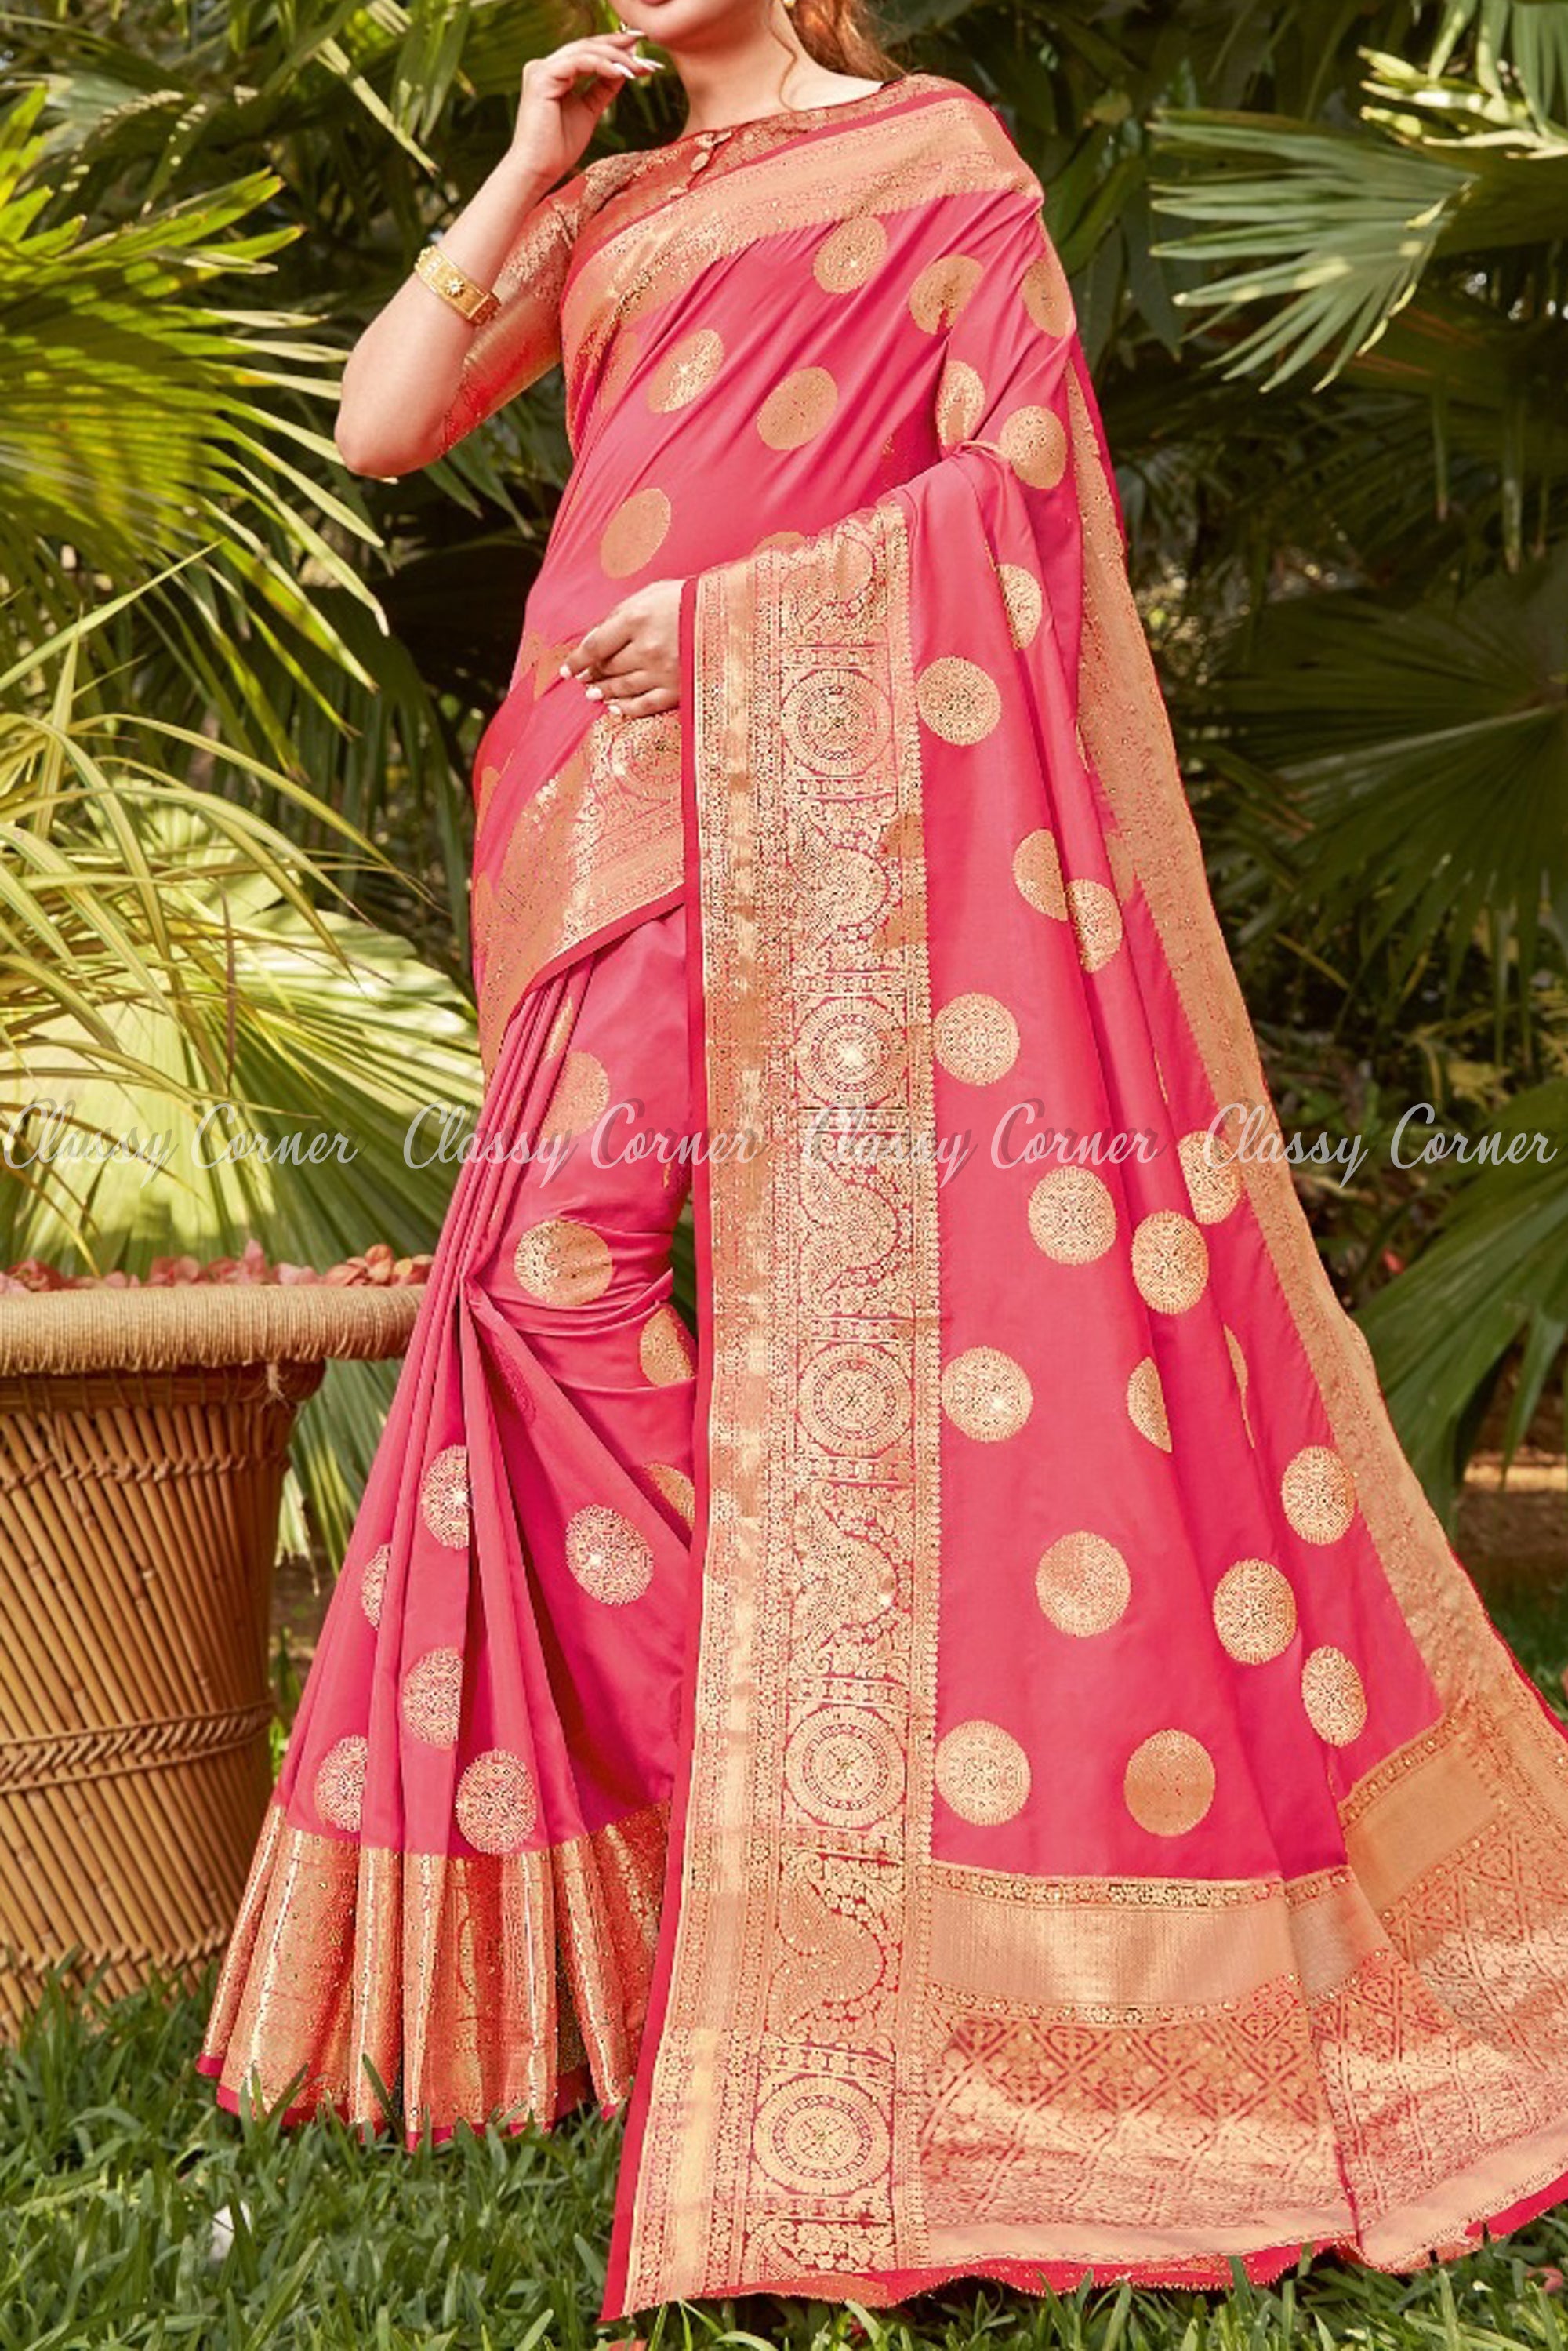 Gorgeous Pink Achal and Body Silk Saree - Classy Corner